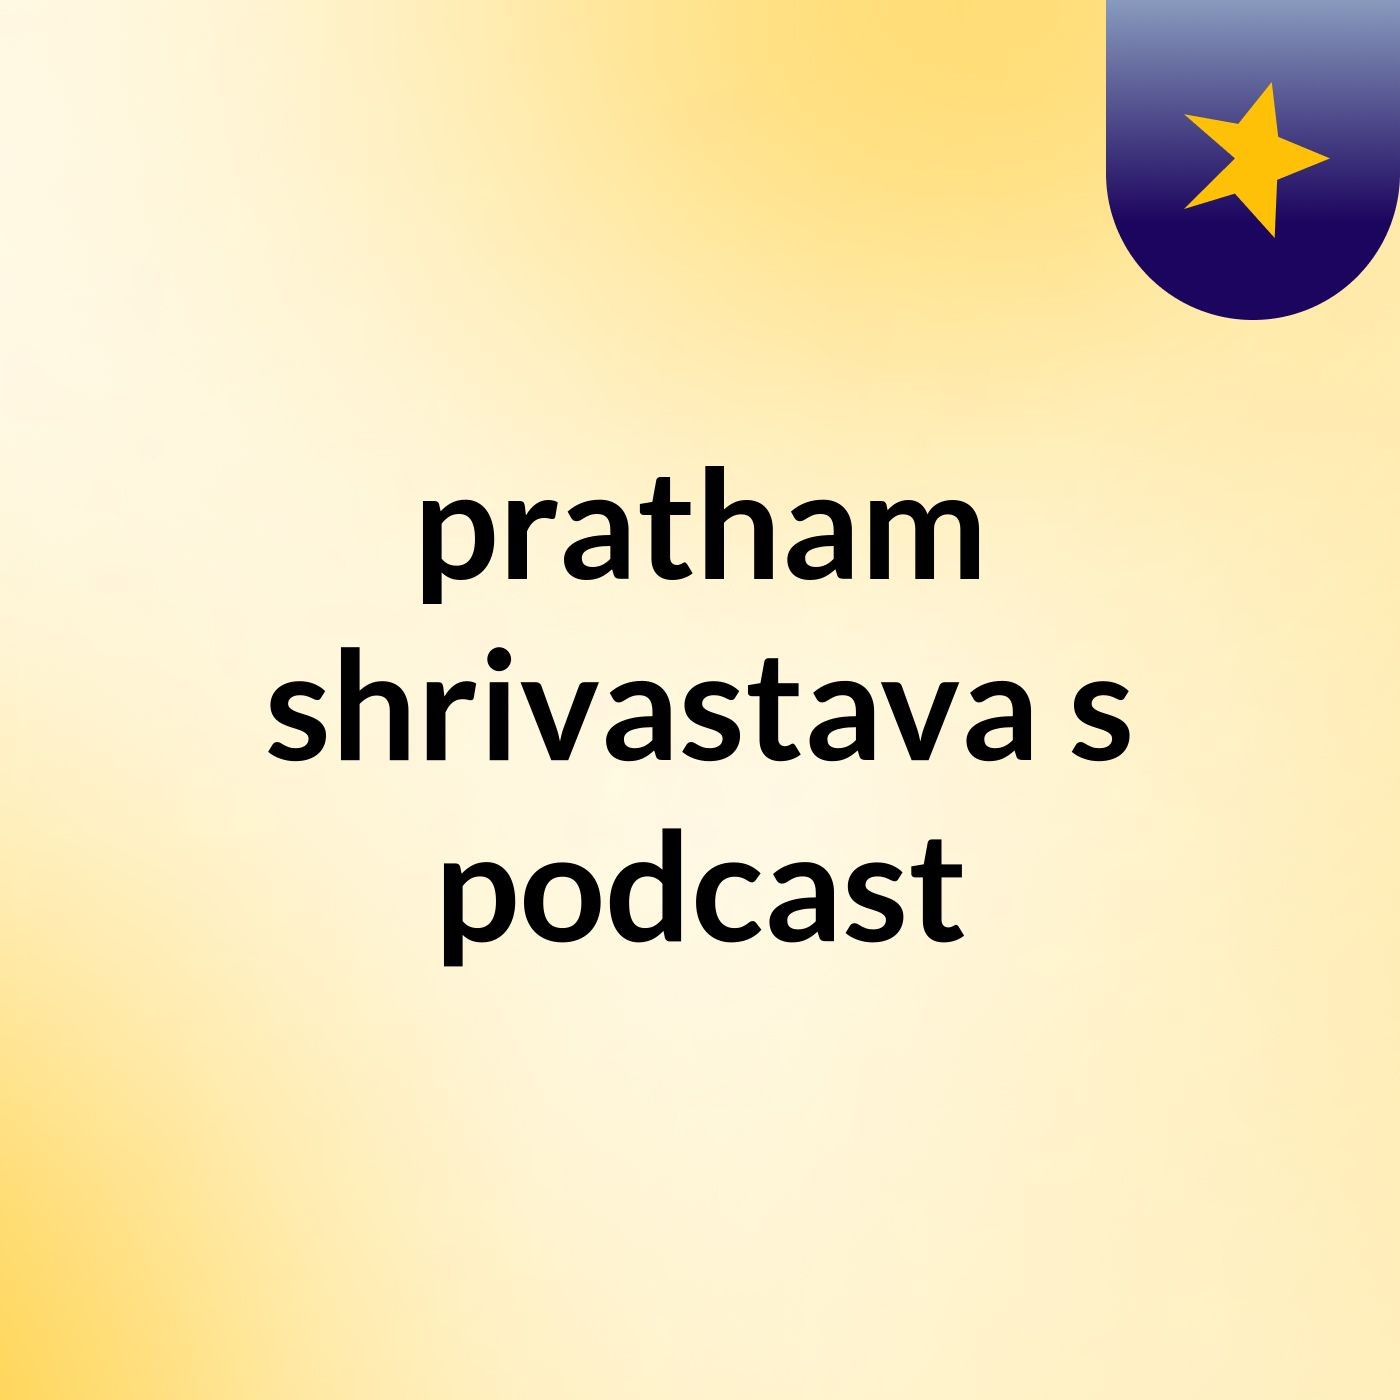 pratham shrivastava's podcast